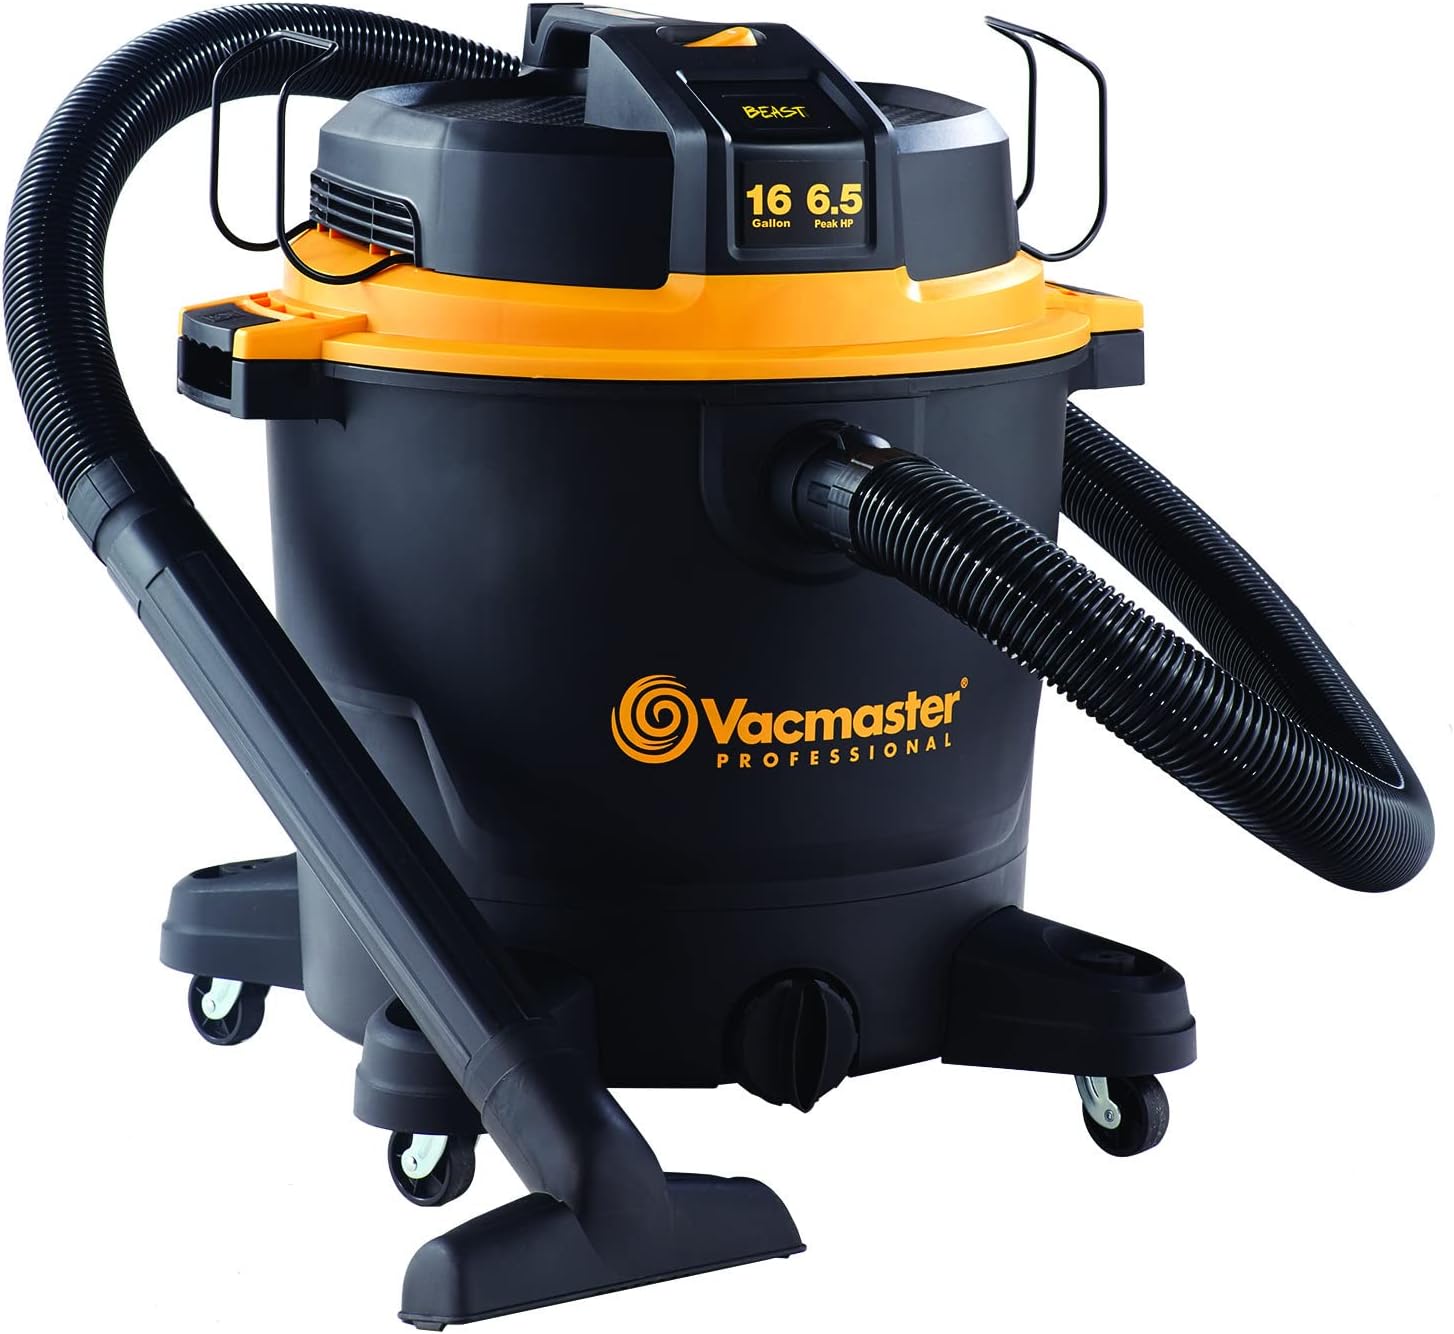 Vacmaster Professional - Wet/Dry Vac 16 Gallon Beast Series